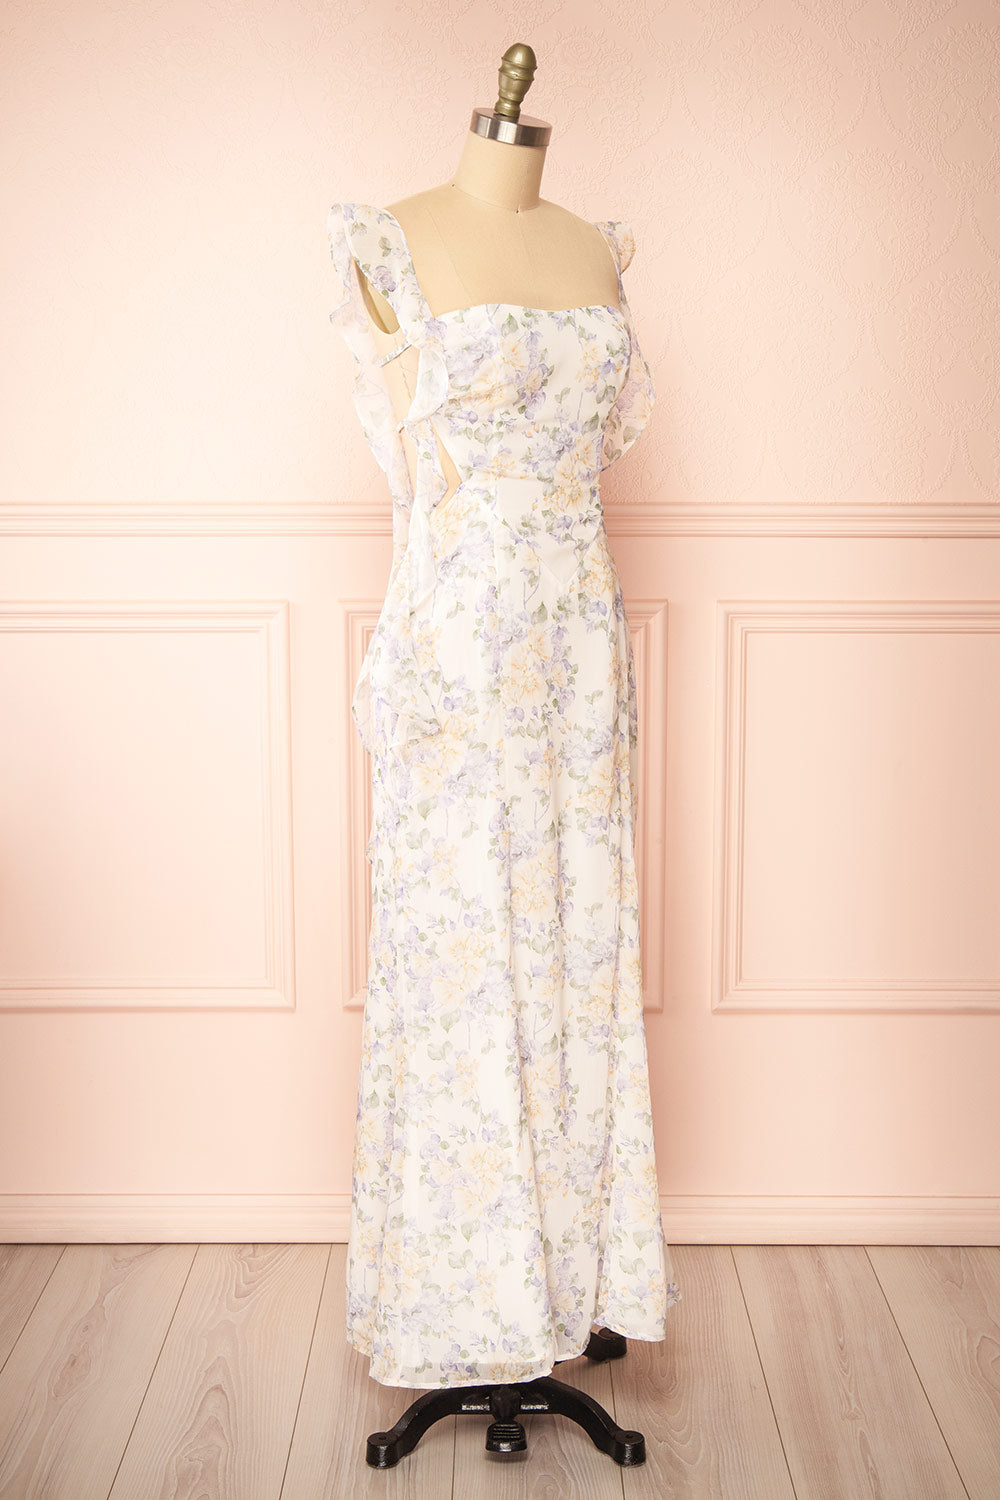 Veronica Floral Maxi Dress w/ Open Back | Boutique 1861 side view